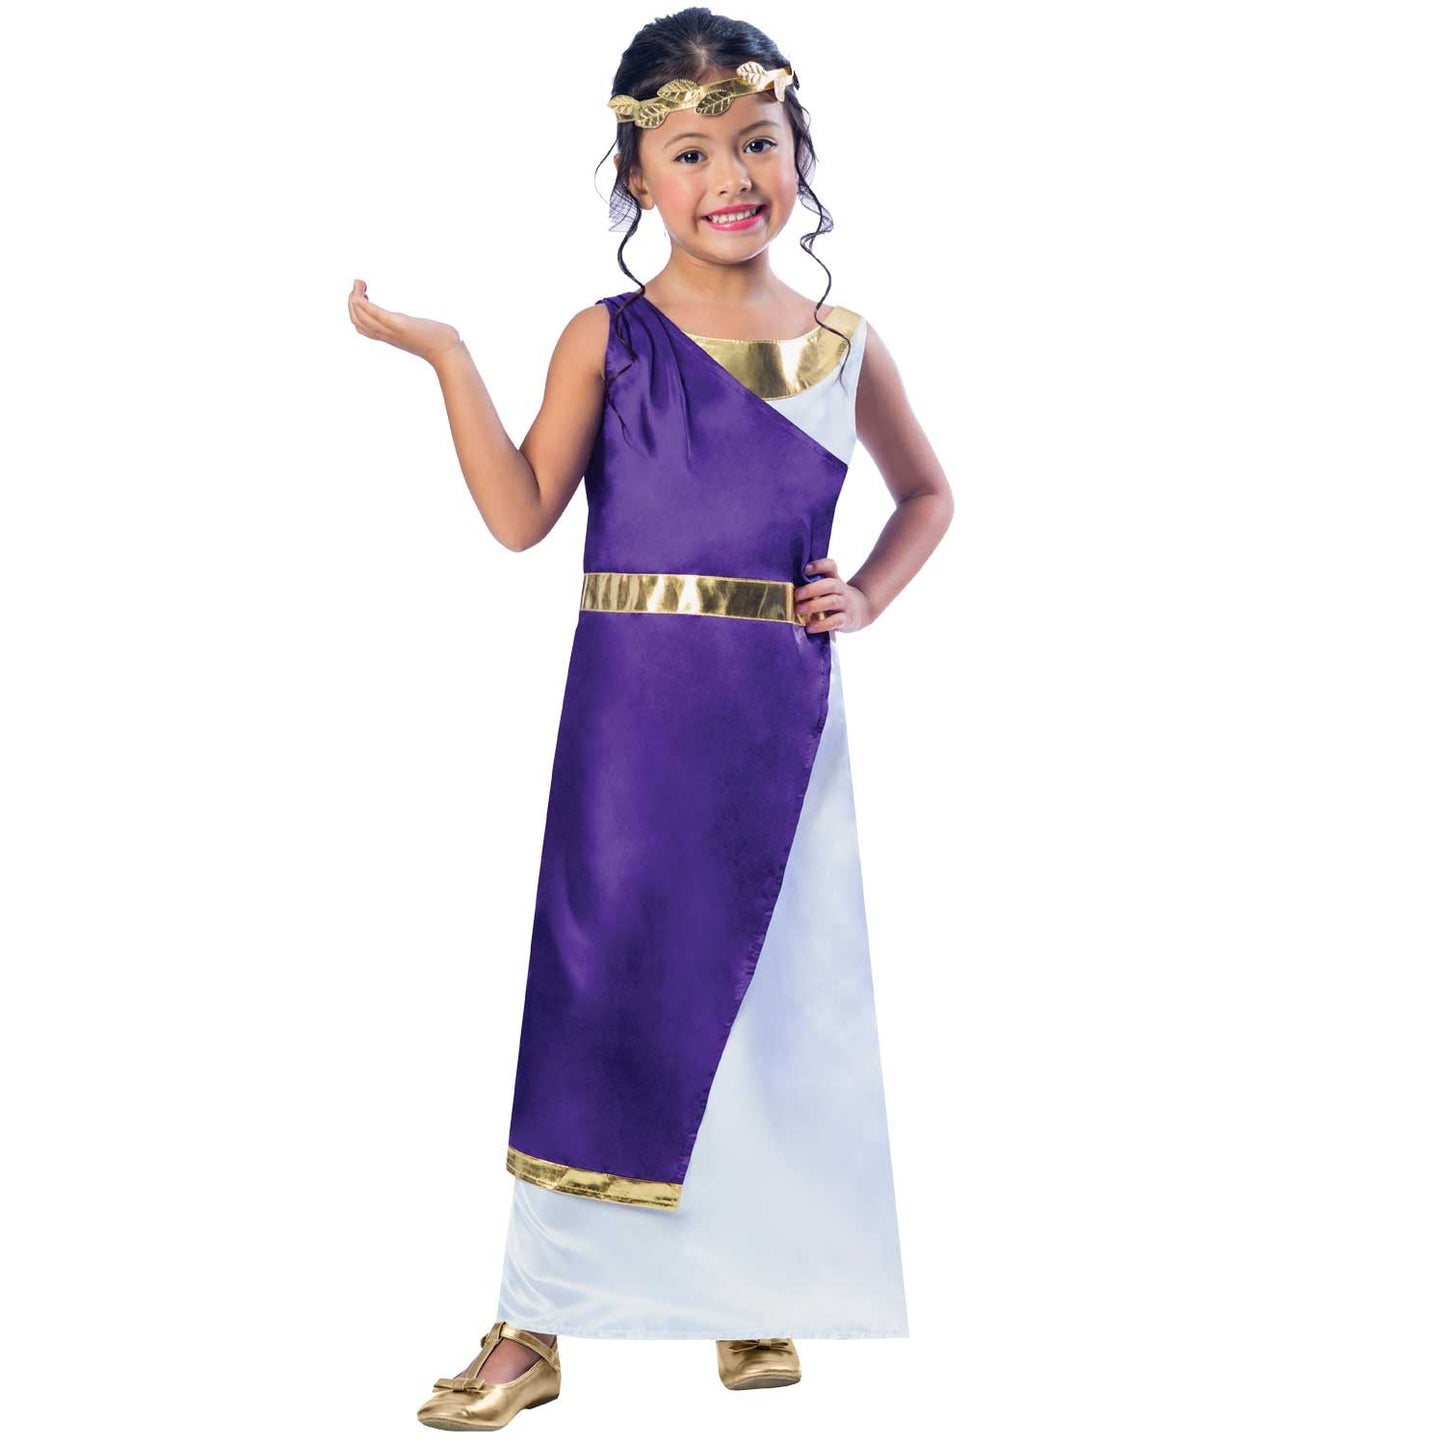 Roman Girl Fancy Dress Costume includes dress and headband